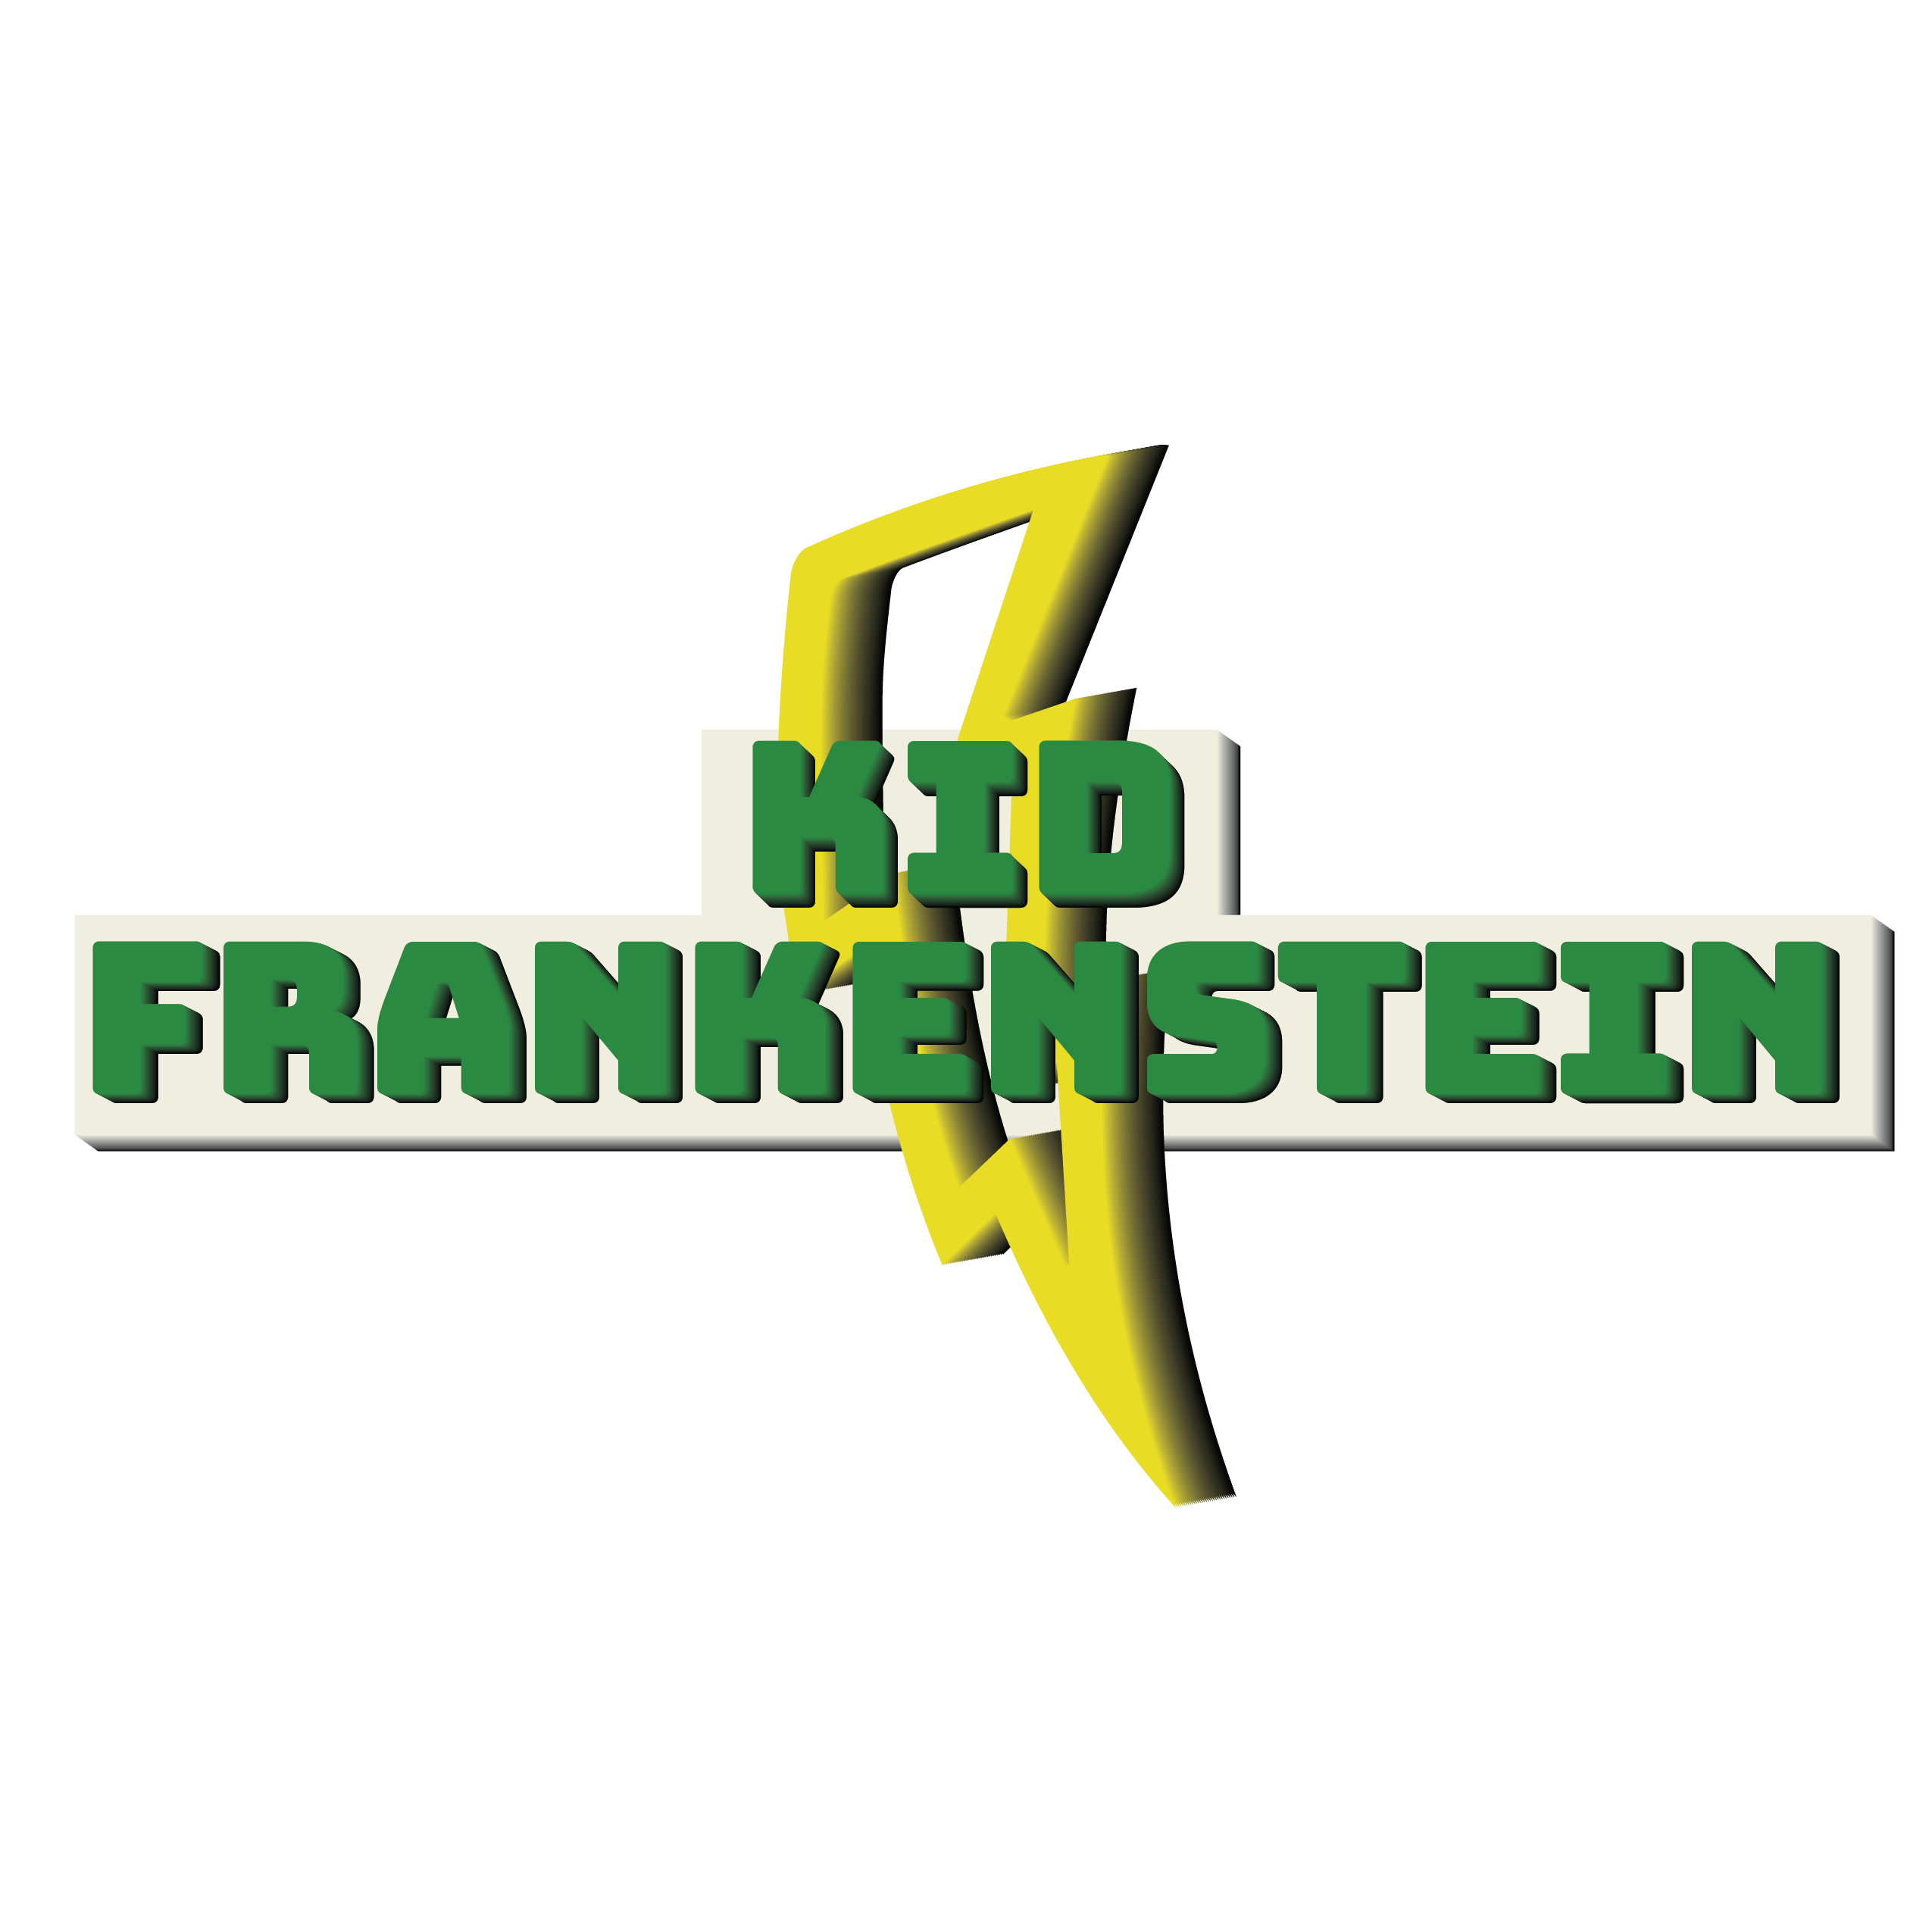 Kid Frankenstein presented by North Texas Performing Arts